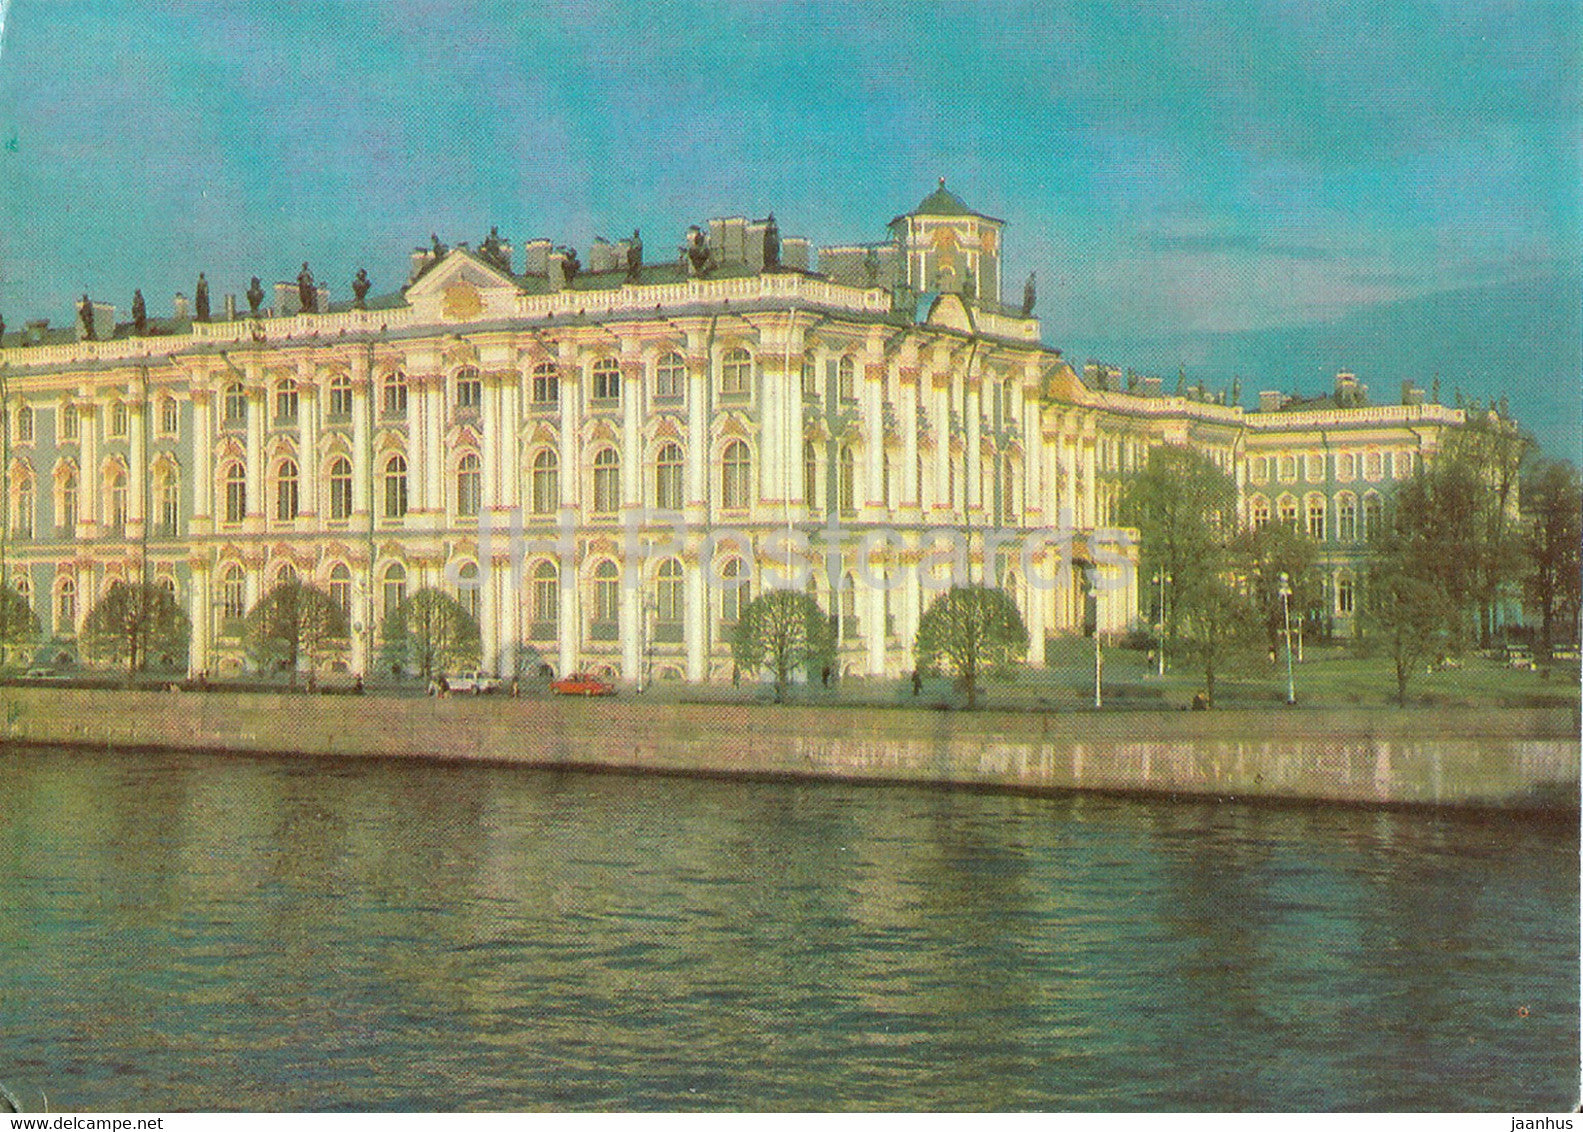 Leningrad - St Petersburg - Winter Palace - State Hermitage Museum - postal stationery - 1 - 1991 - Russia USSR - unused - JH Postcards